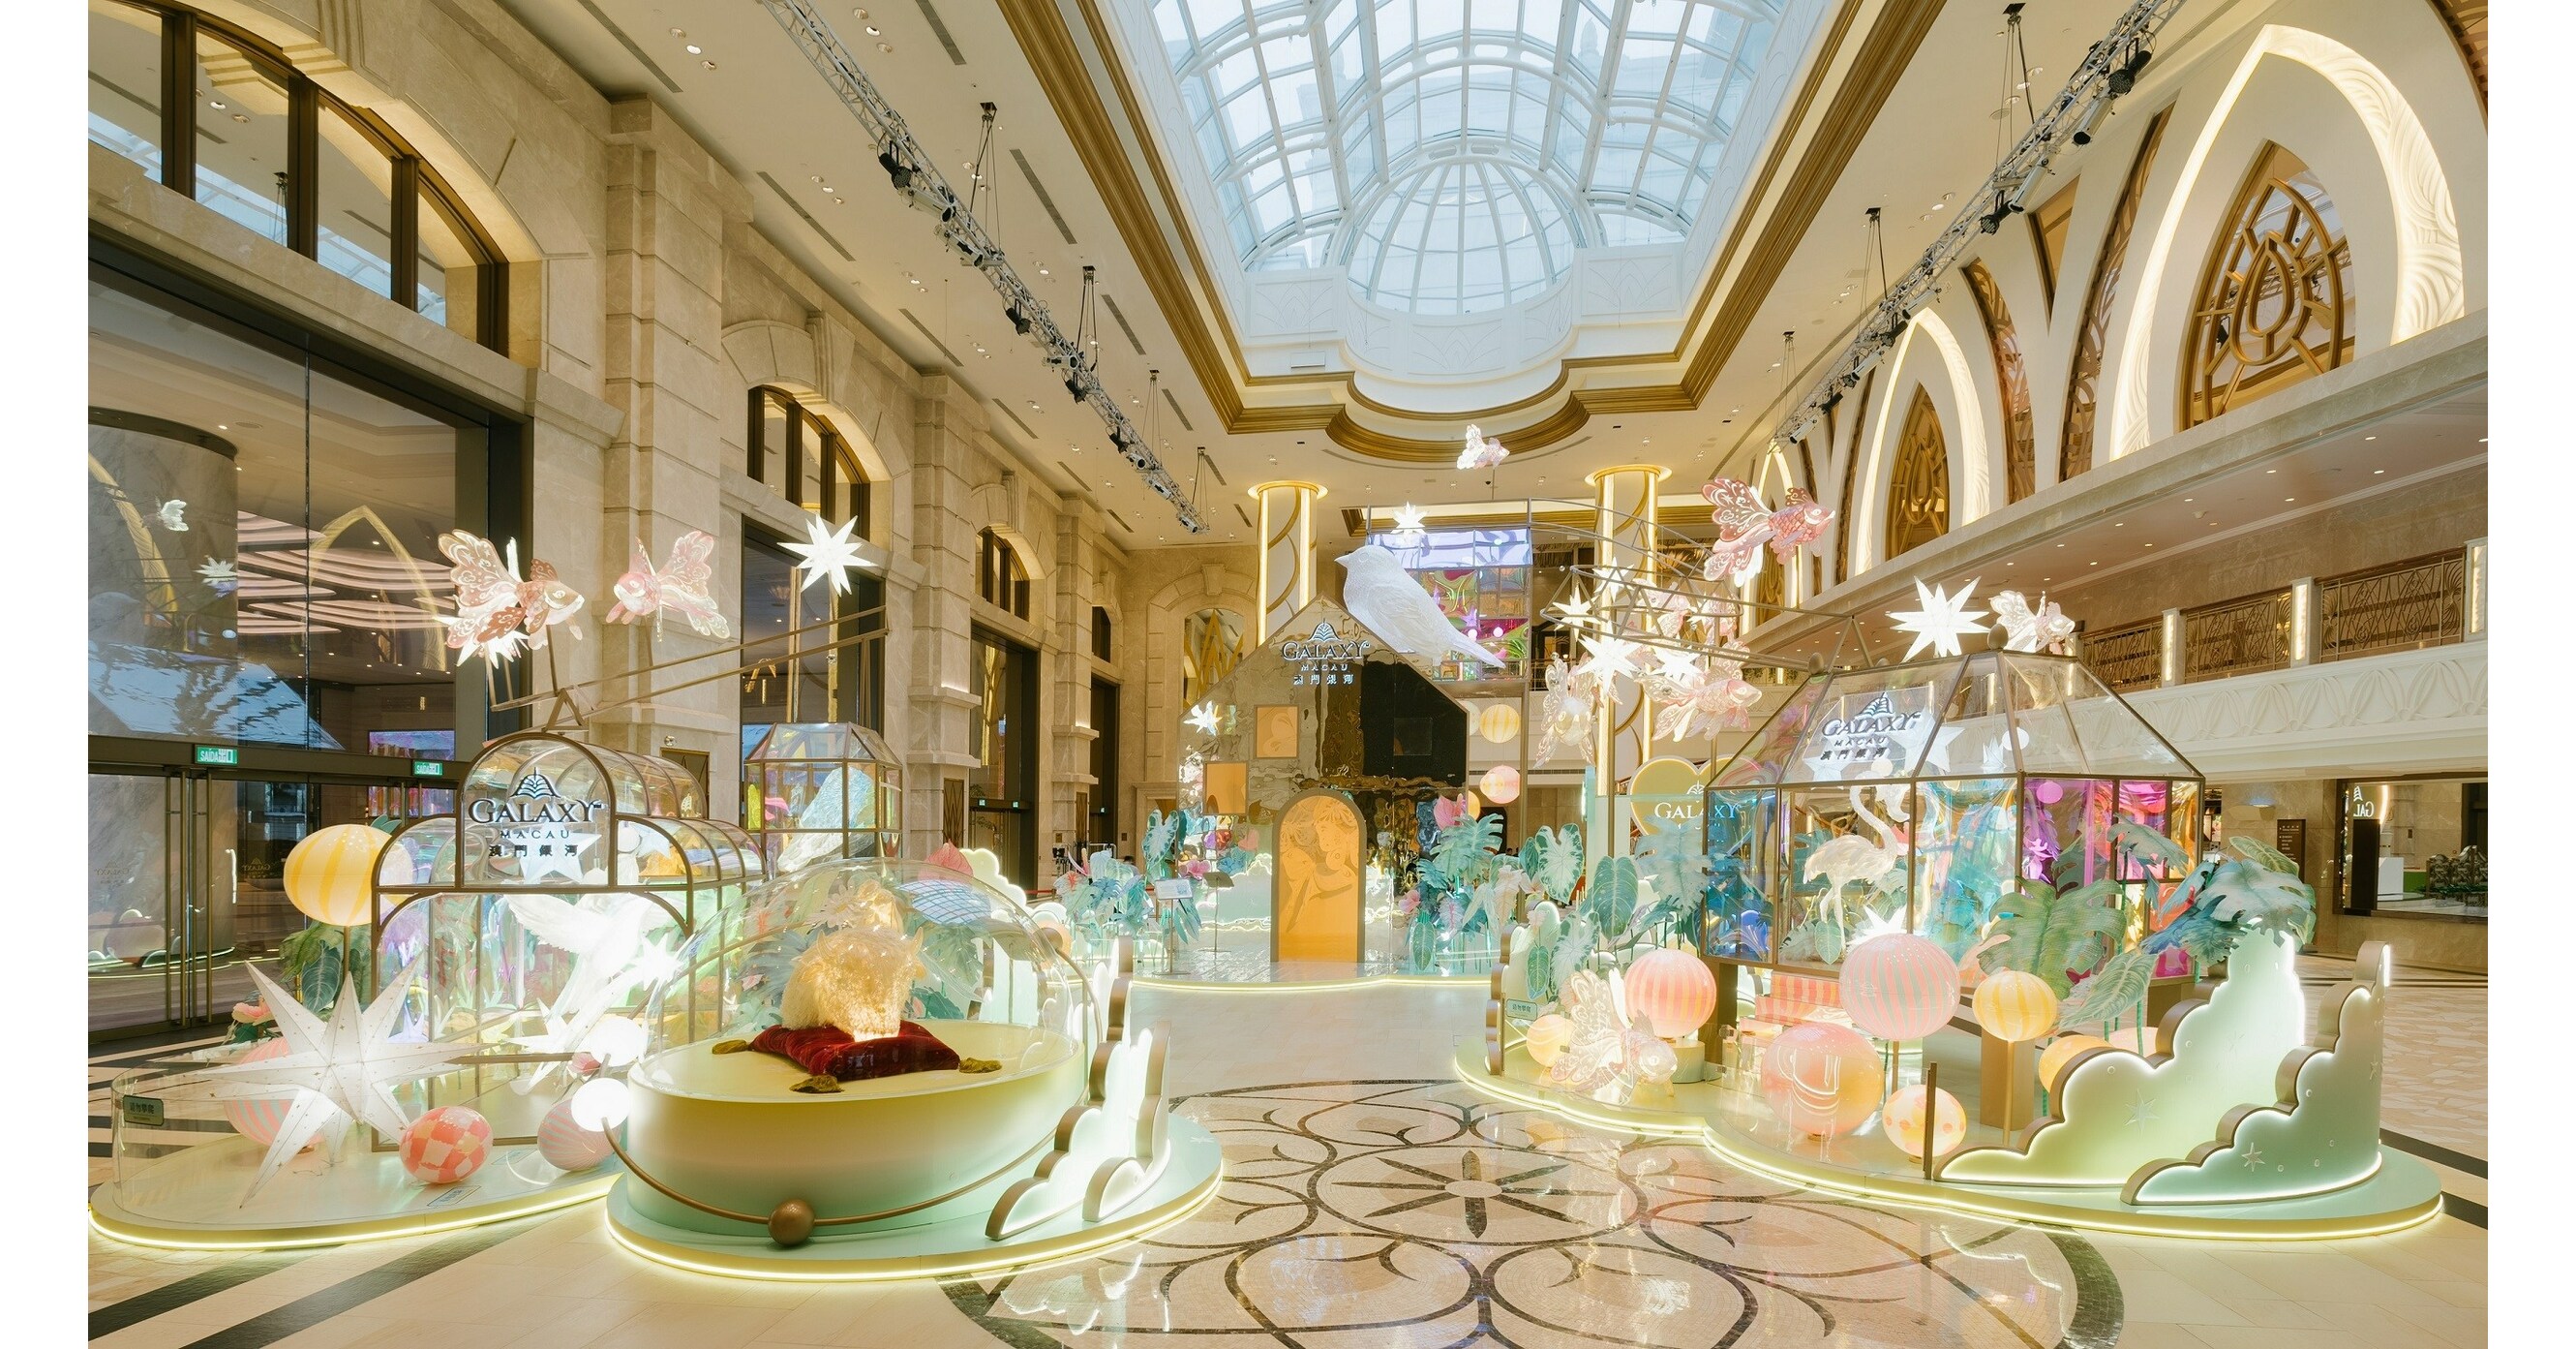 T Galleria Beauty by DFS  Galaxy Macau, the World-Class Asian